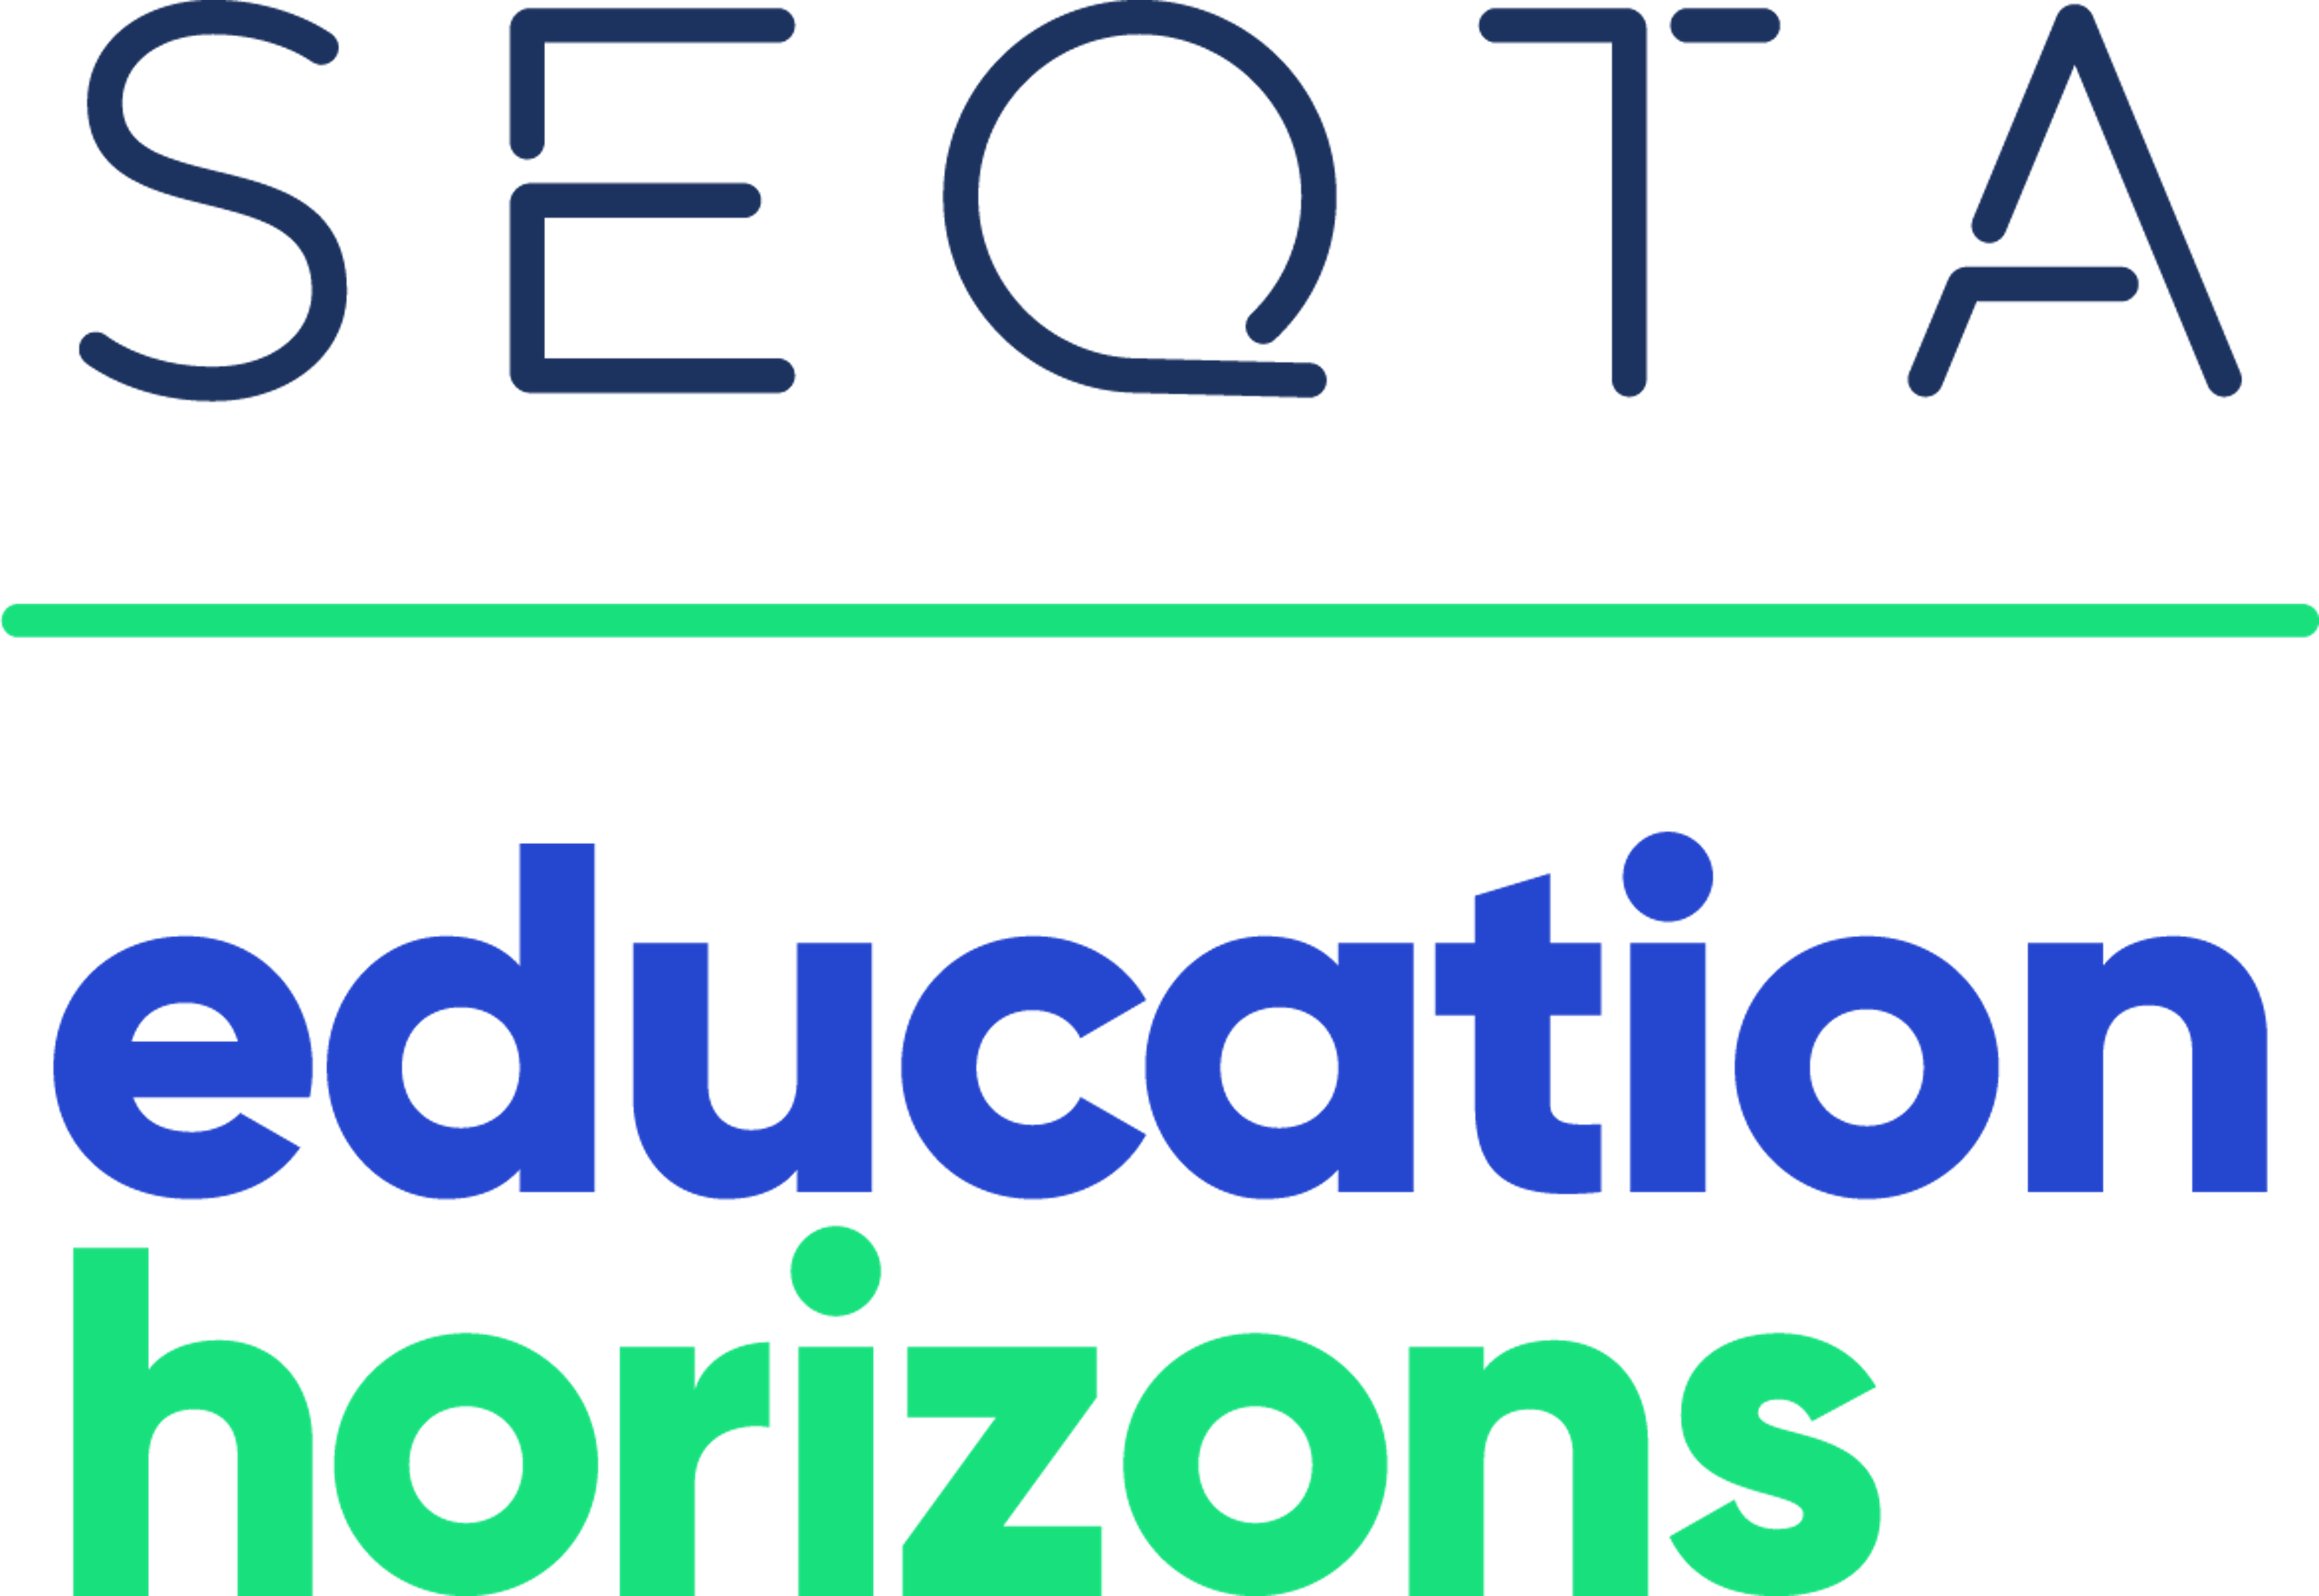 SEQTA Logo